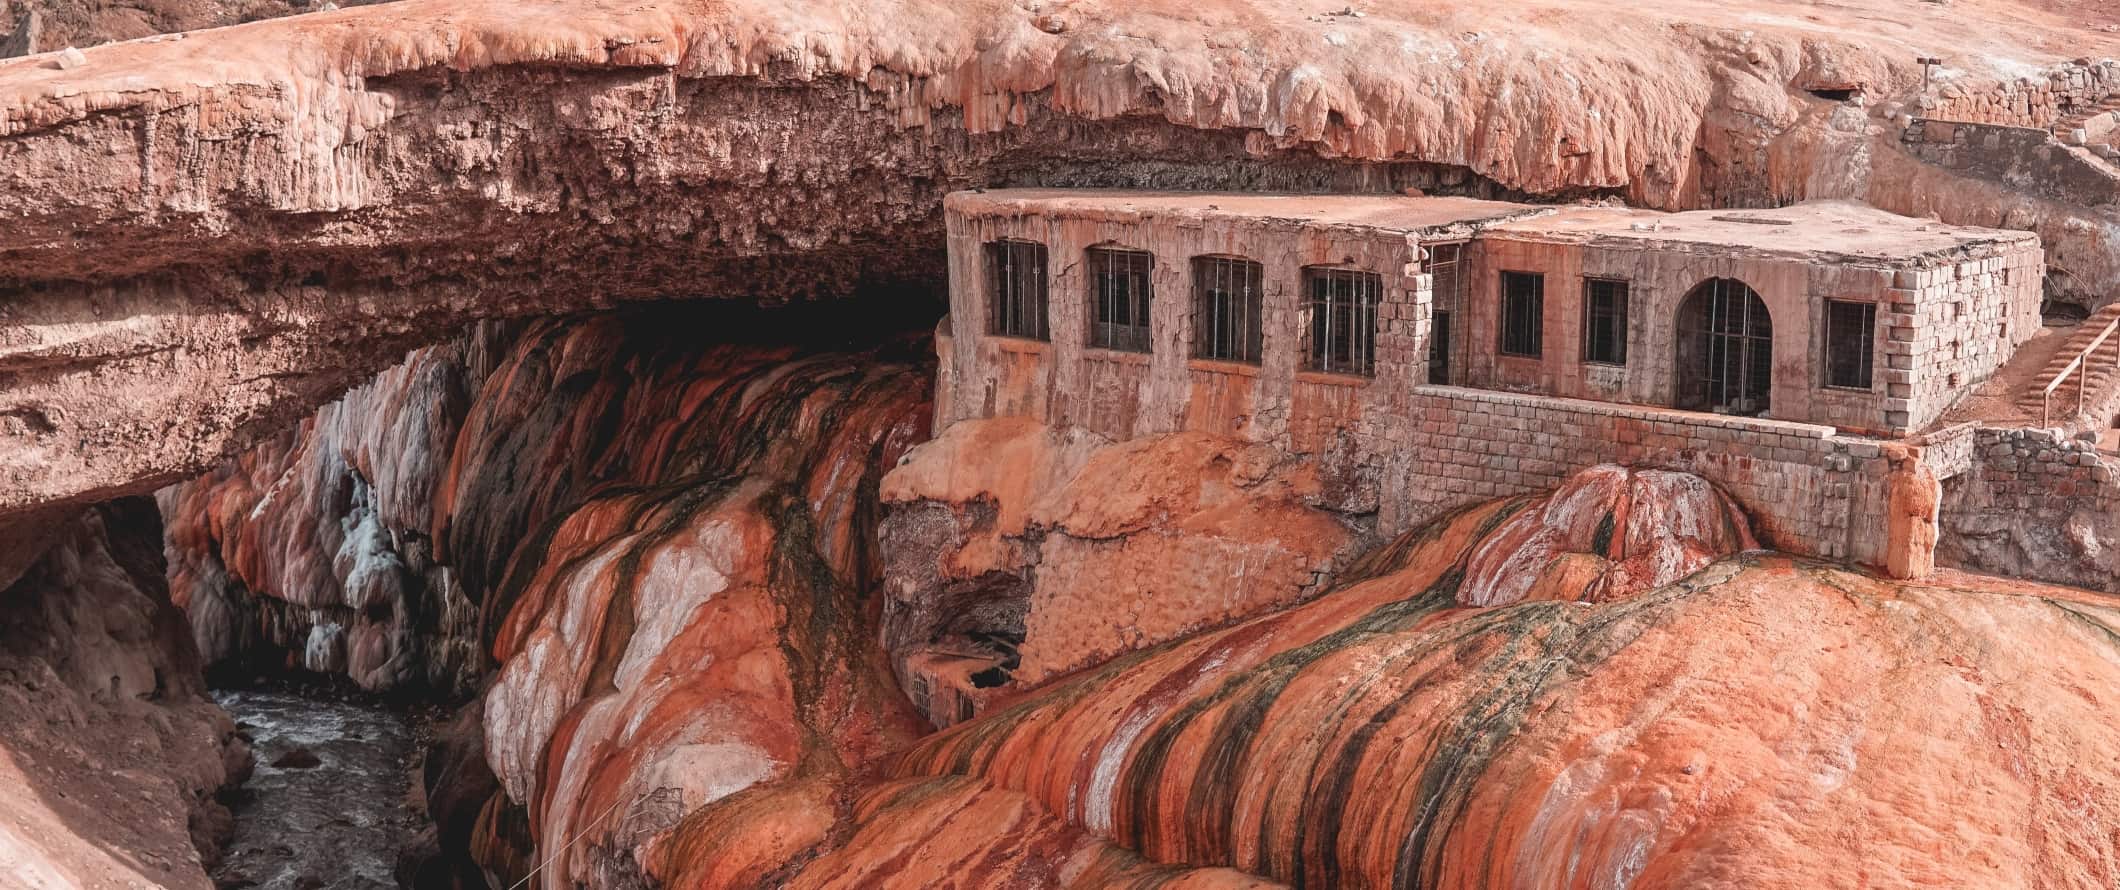 Historic brick building built into coppery-gold mineral deposits at Puente del Inca near Mendoza, Argentina